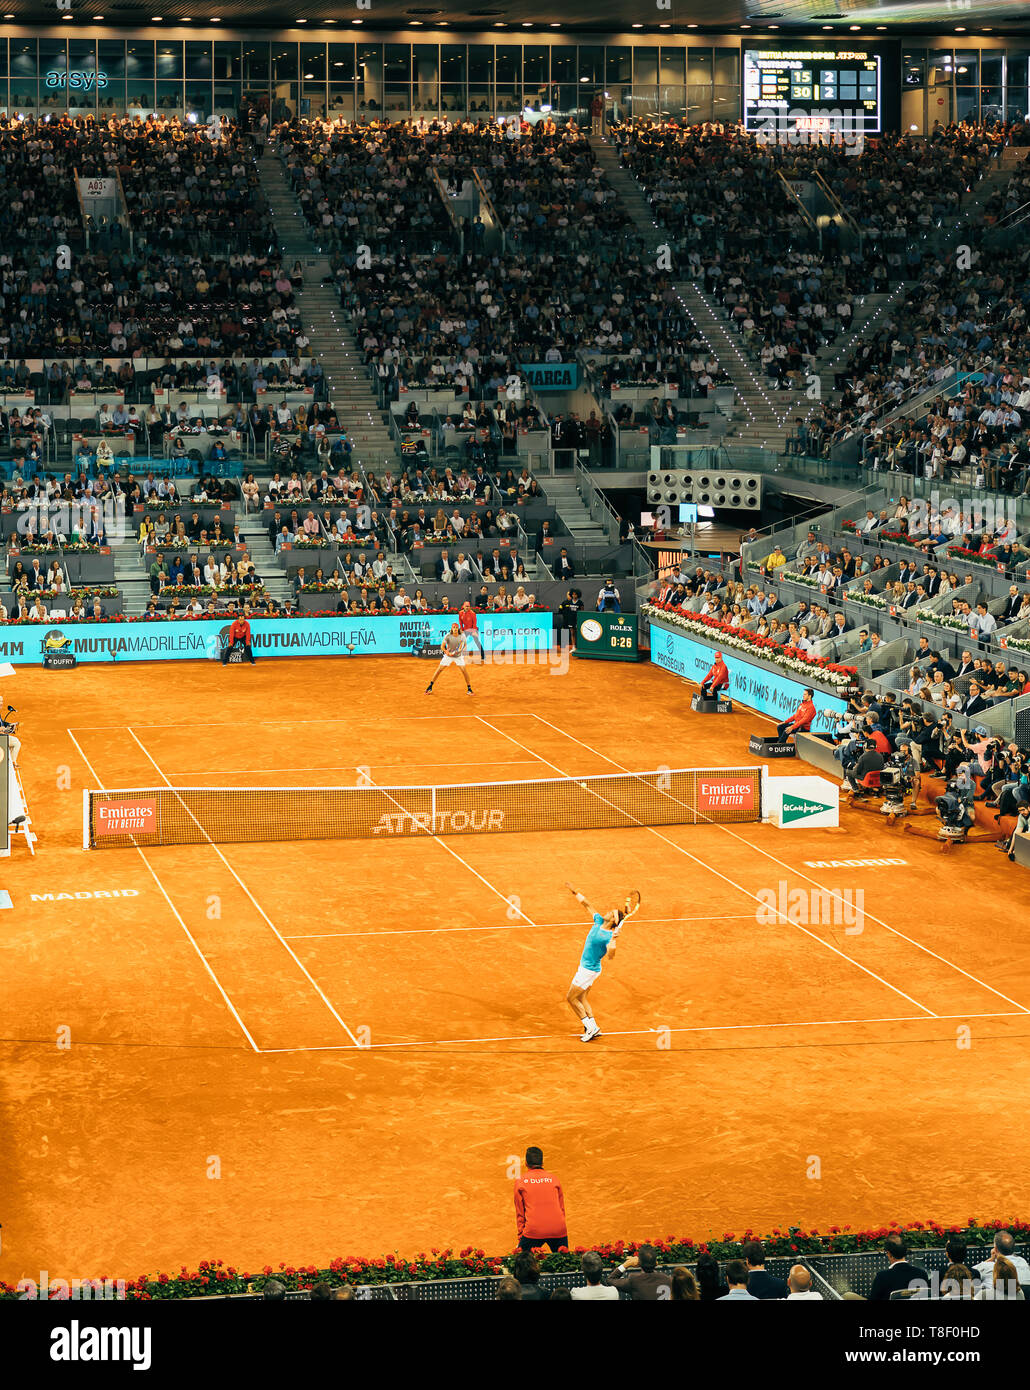 Madrid, Spain; 11 may 2019: The Caja Magica tennis center during the 2019 Mutua Madrid Open ATP Premier Mandatory tennis tournament, men semifinal Raf Stock Photo